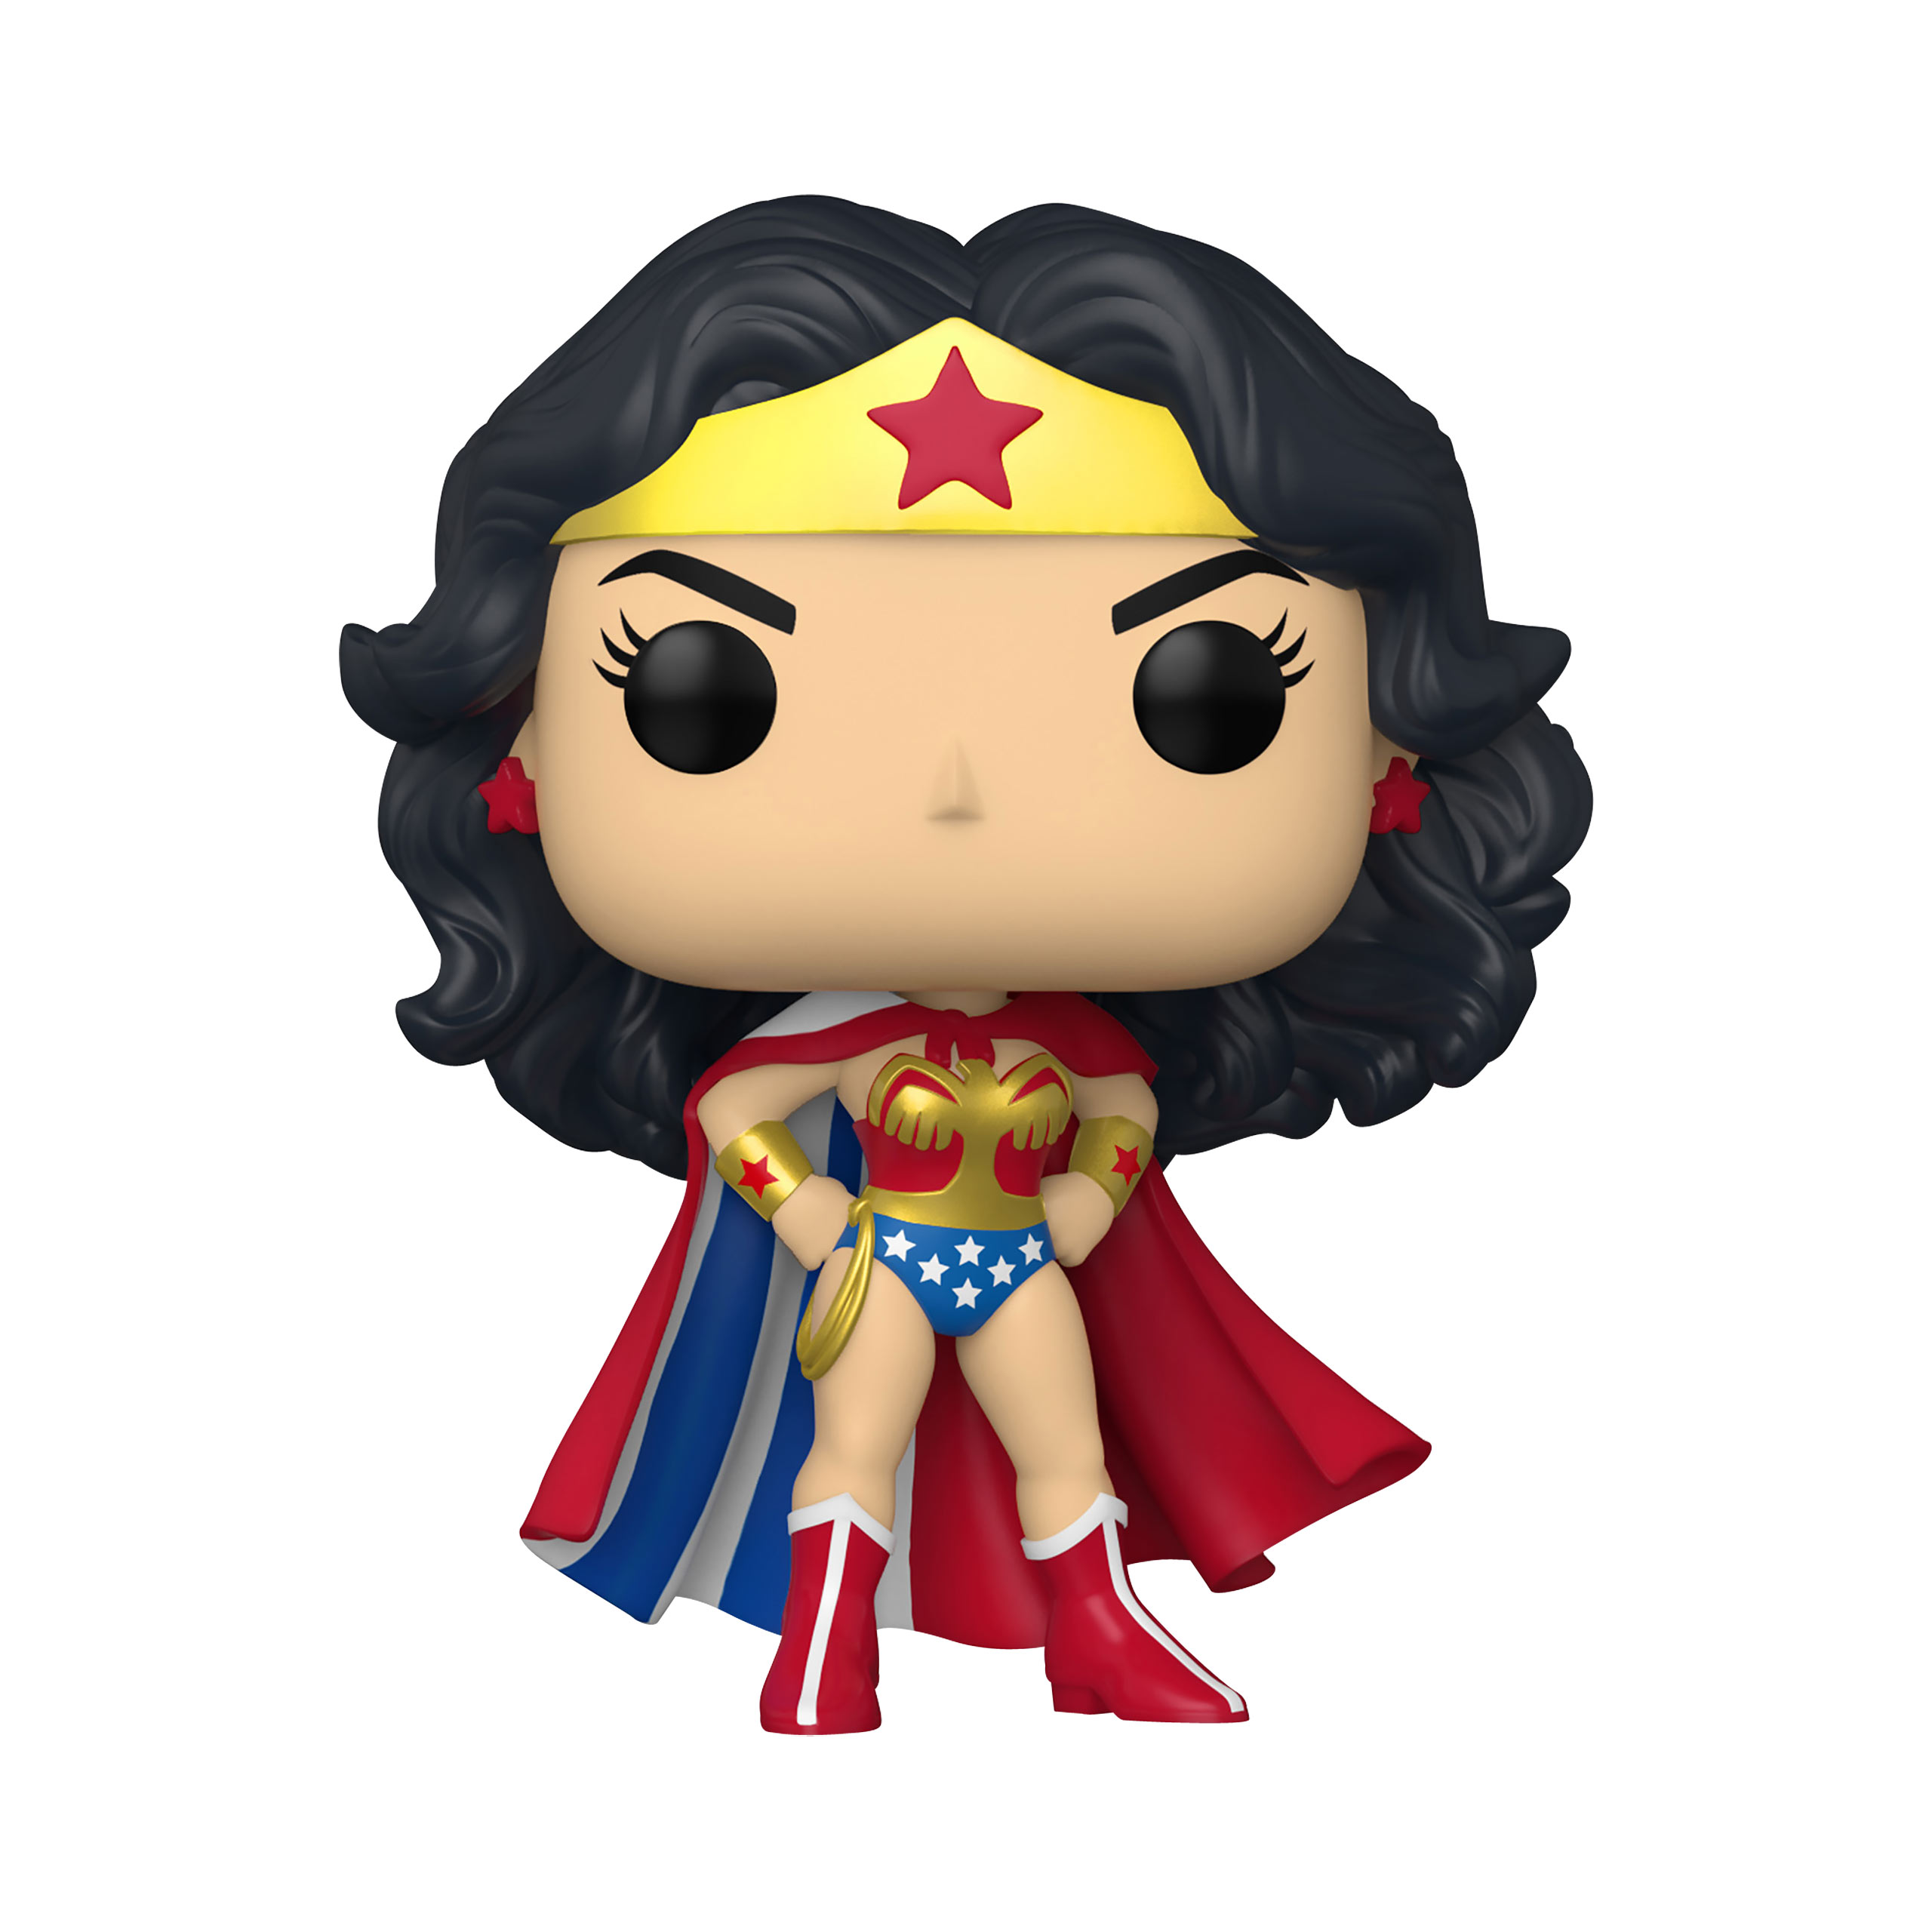 Wonder Woman mit Cape Funko Pop Figur